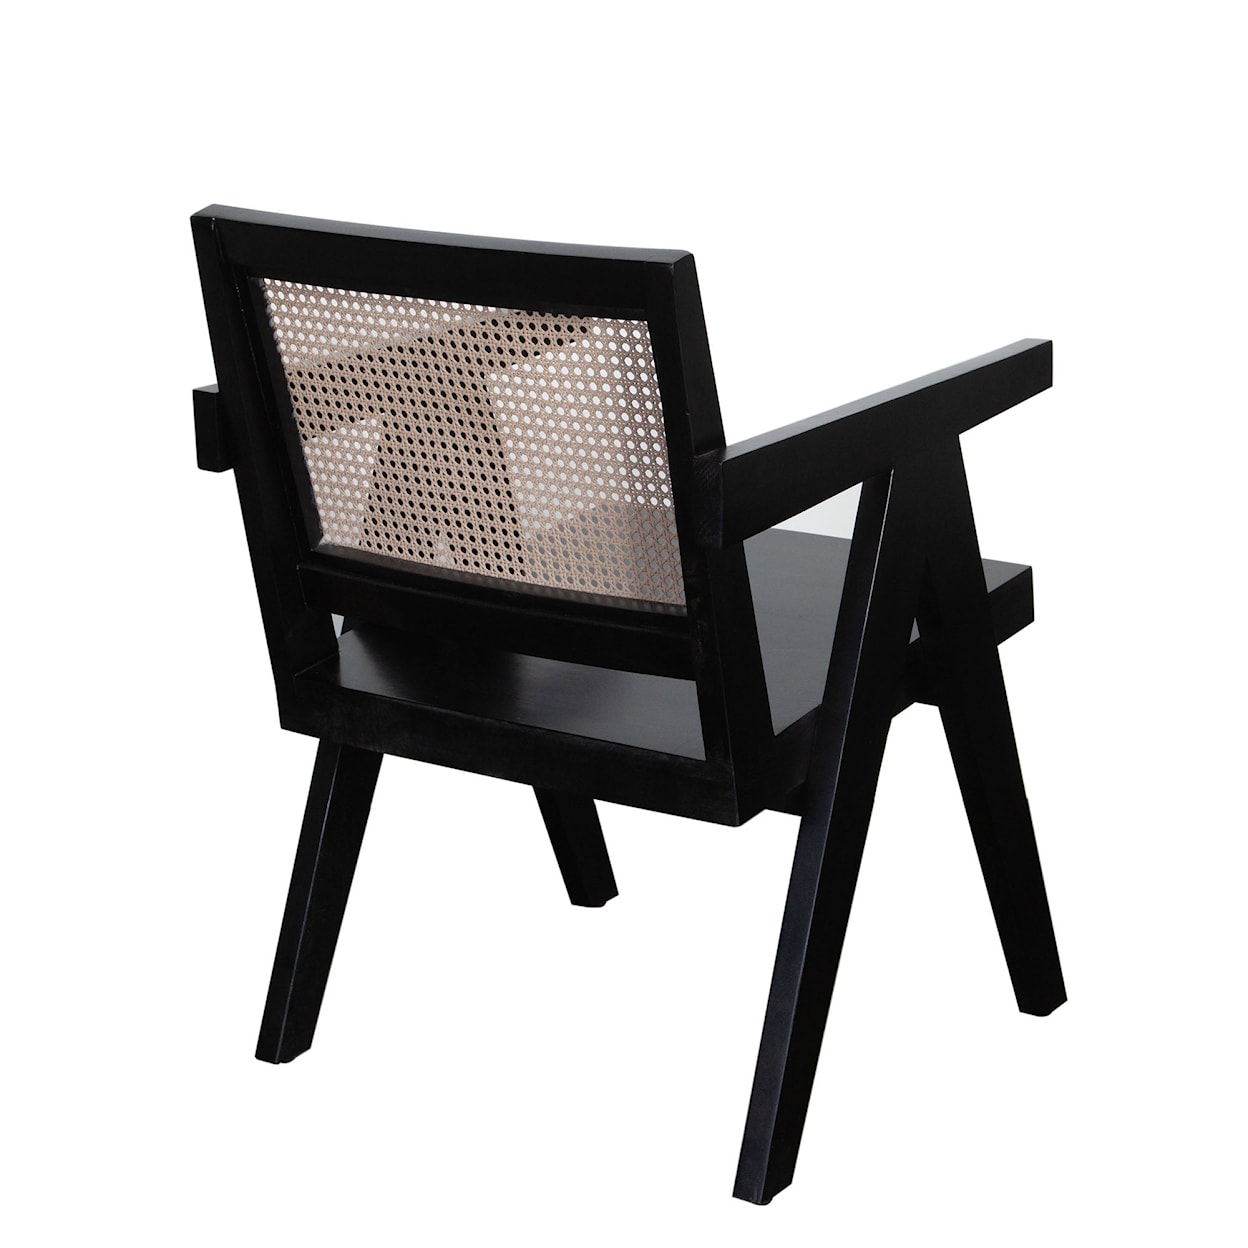 Diamond Sofa Furniture Carter Accent Chair